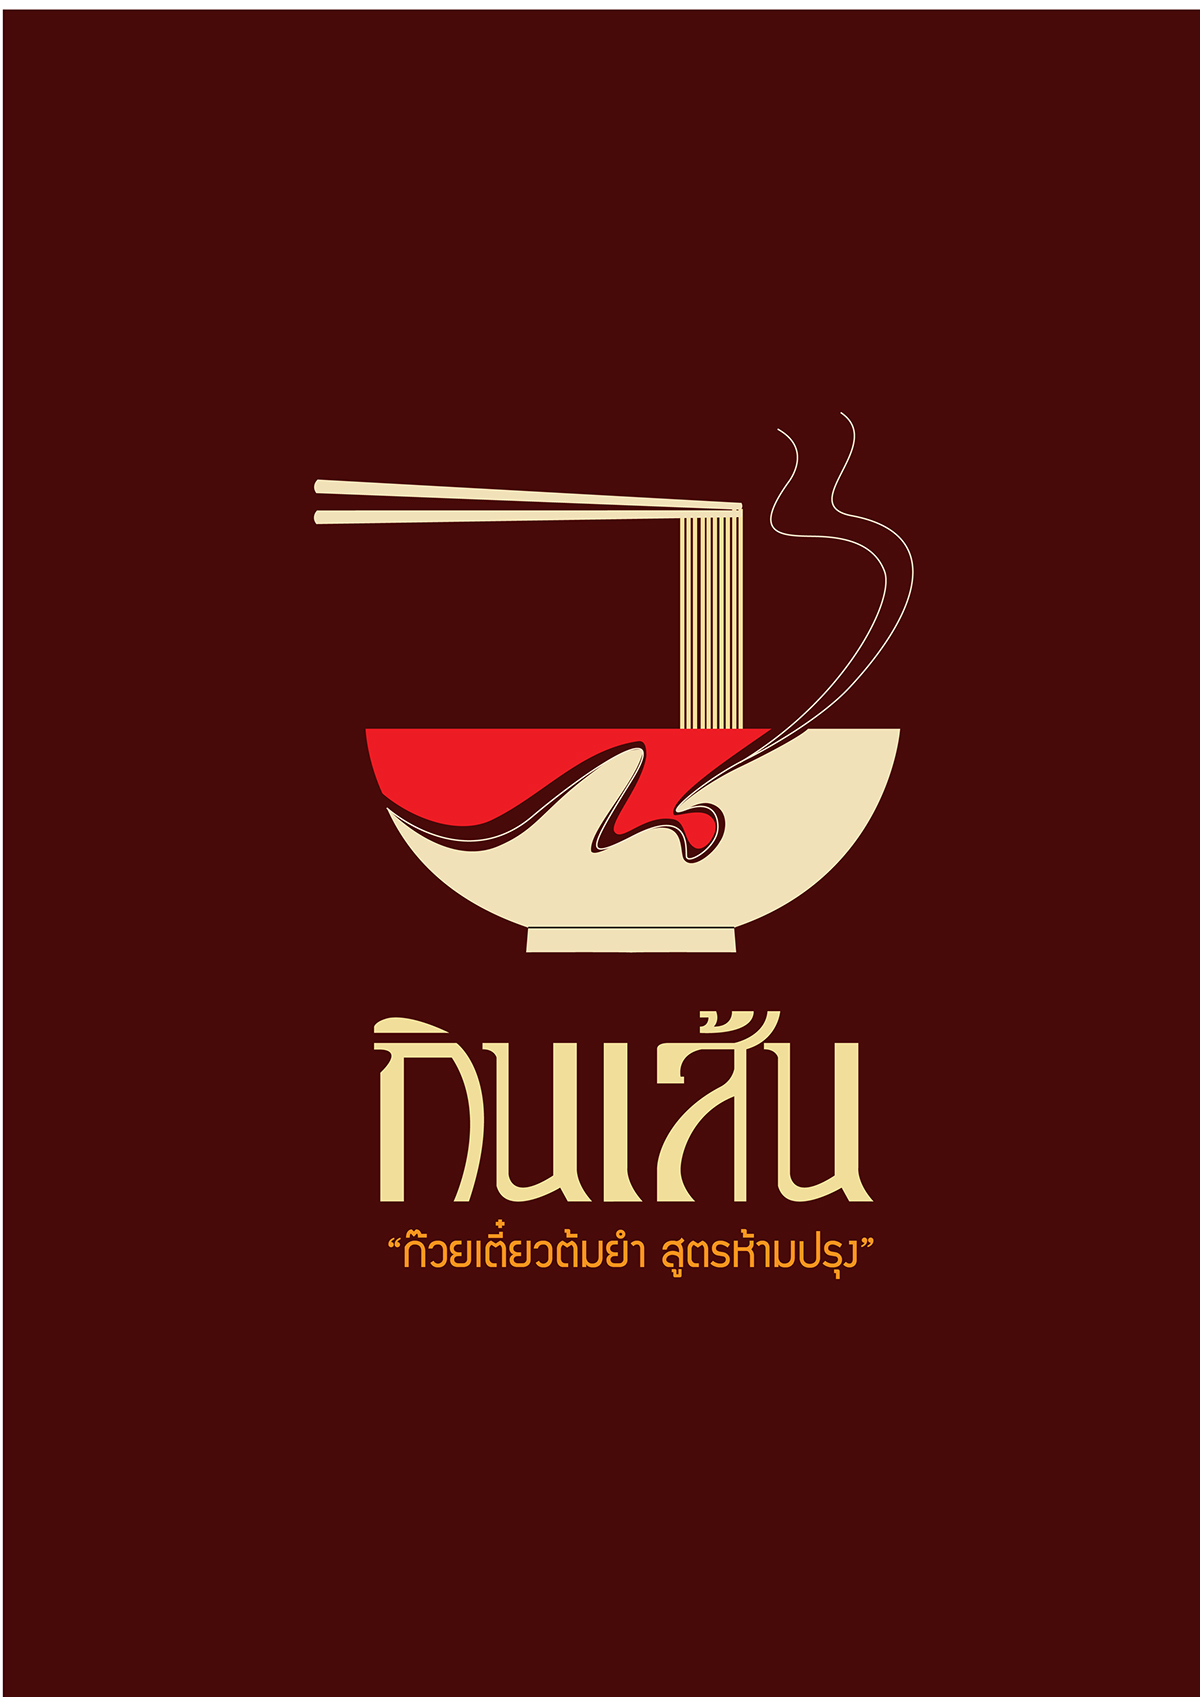 logo noodle restaurant Thai font Calligraphy   Thailand Food Shop font design chinese